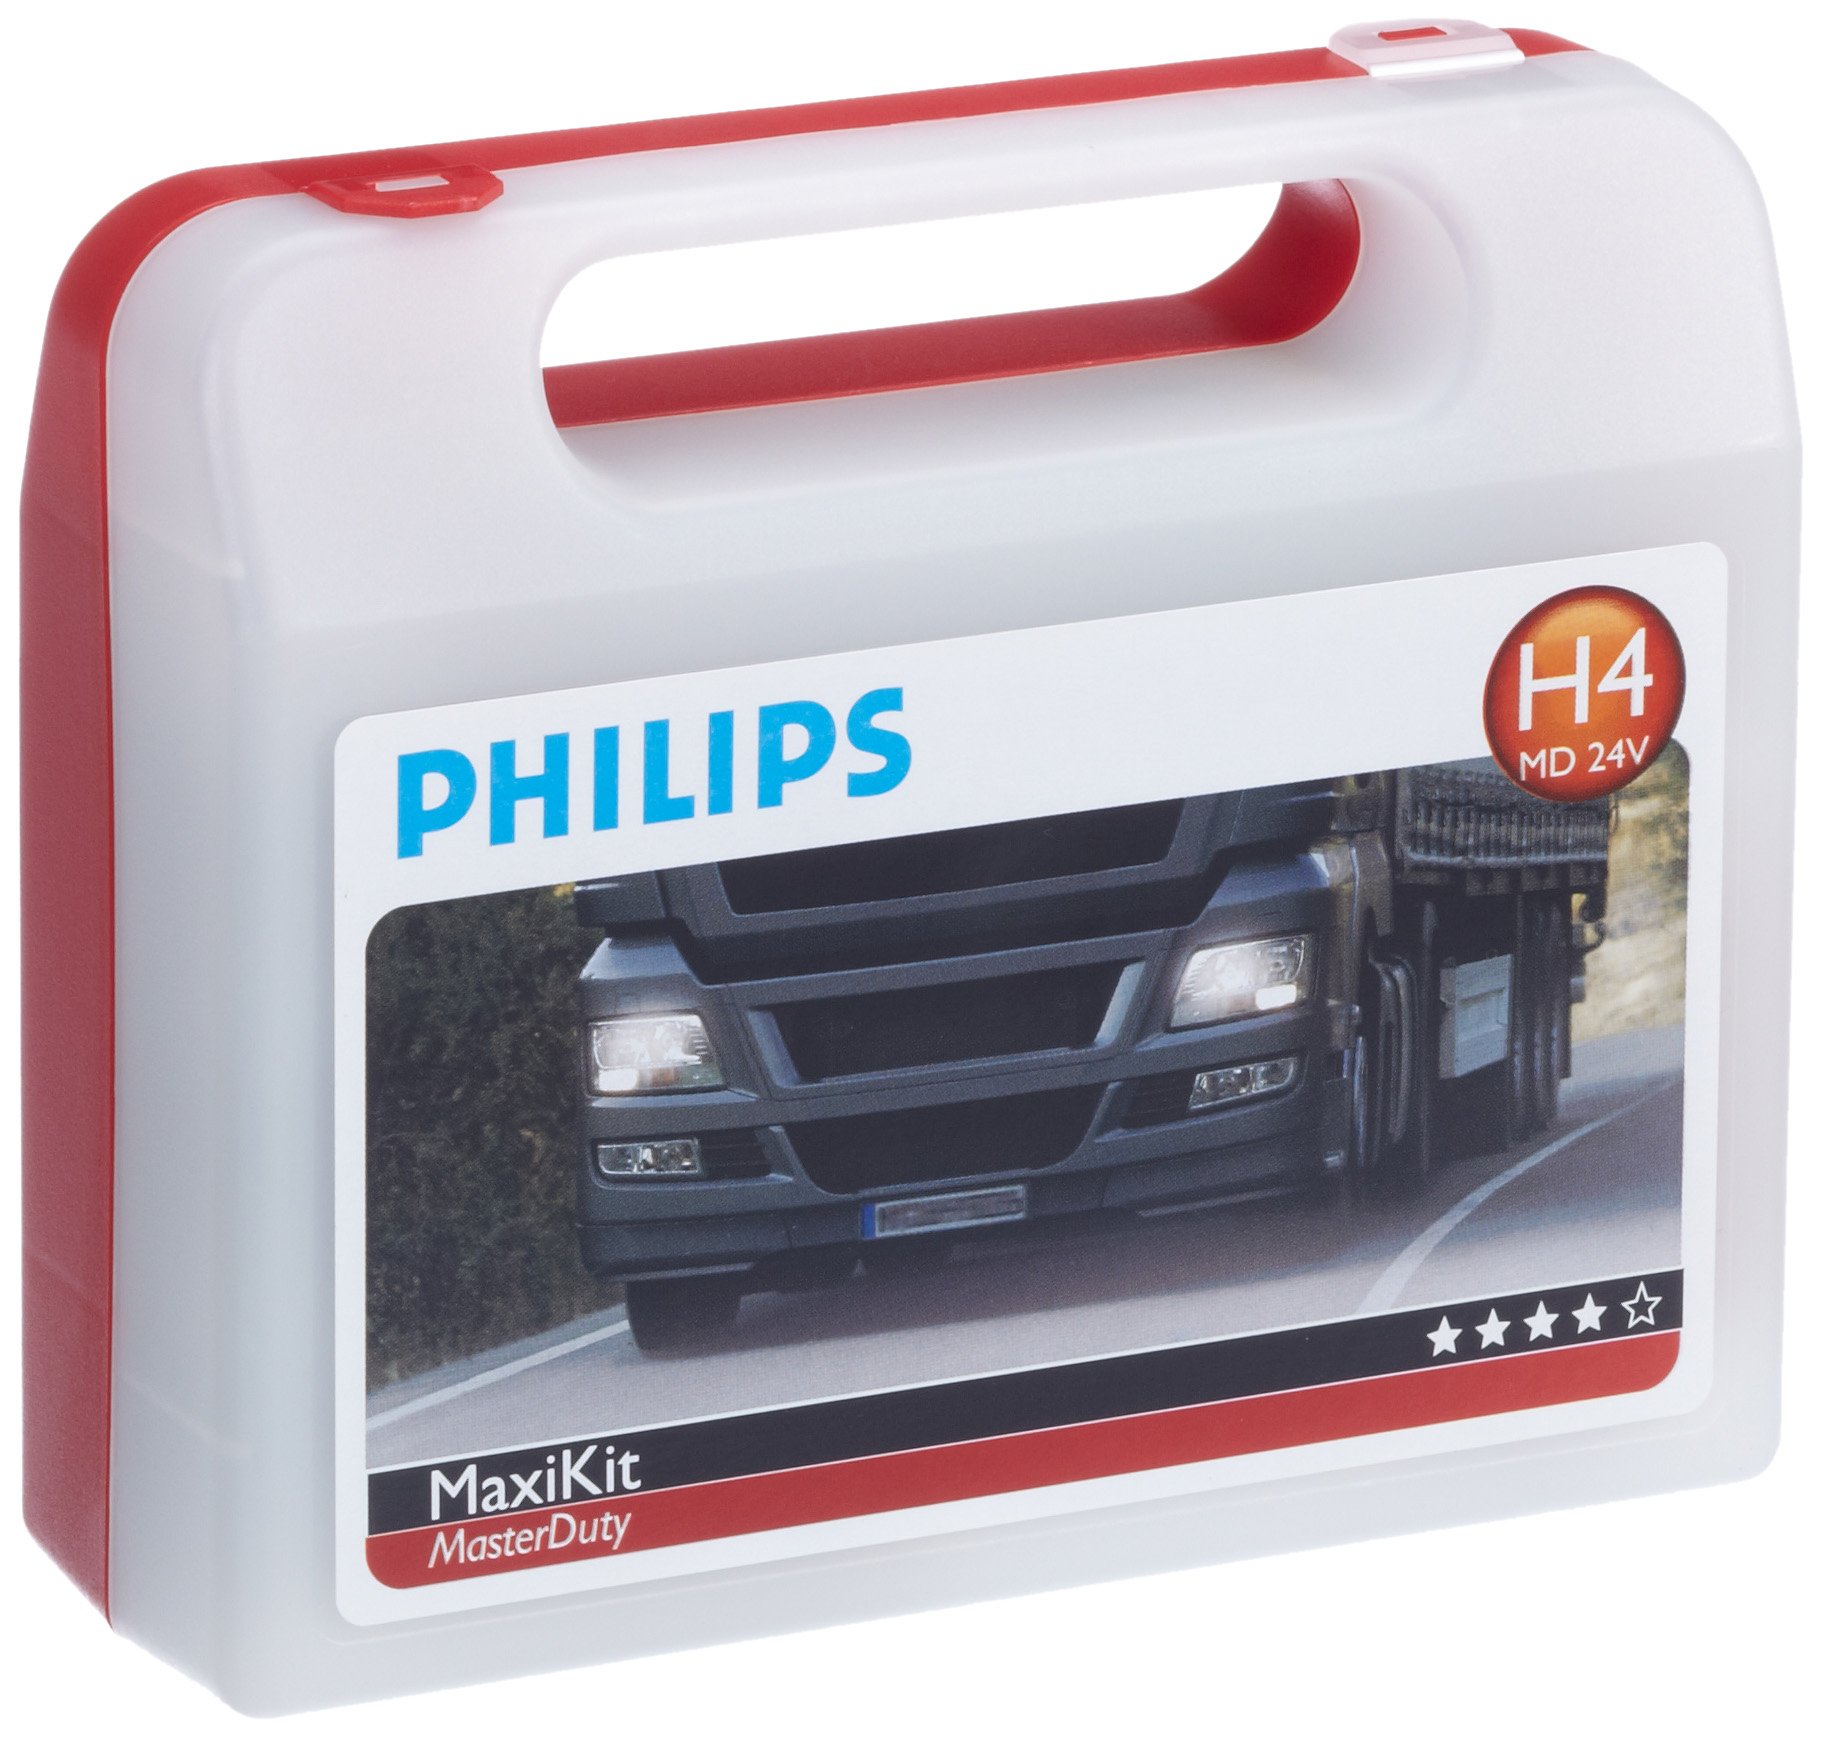 Philips MasterDuty MaxiKit H4 24V Ersatzbox von Philips automotive lighting